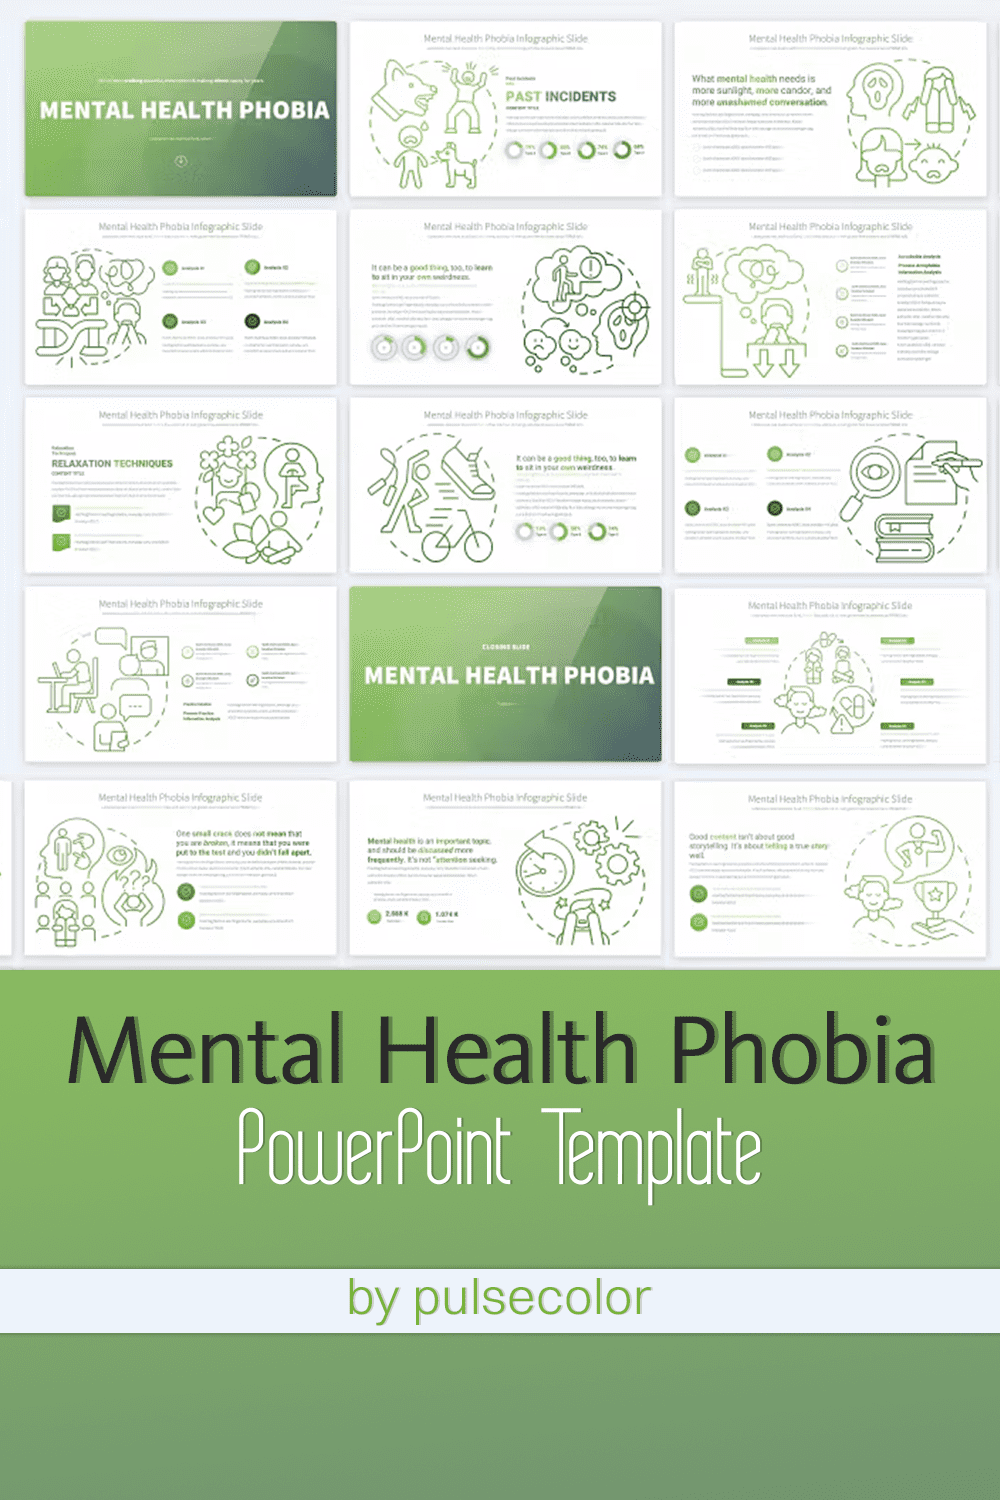 Mental Health Phobia - PowerPoint Template - Pinterest.